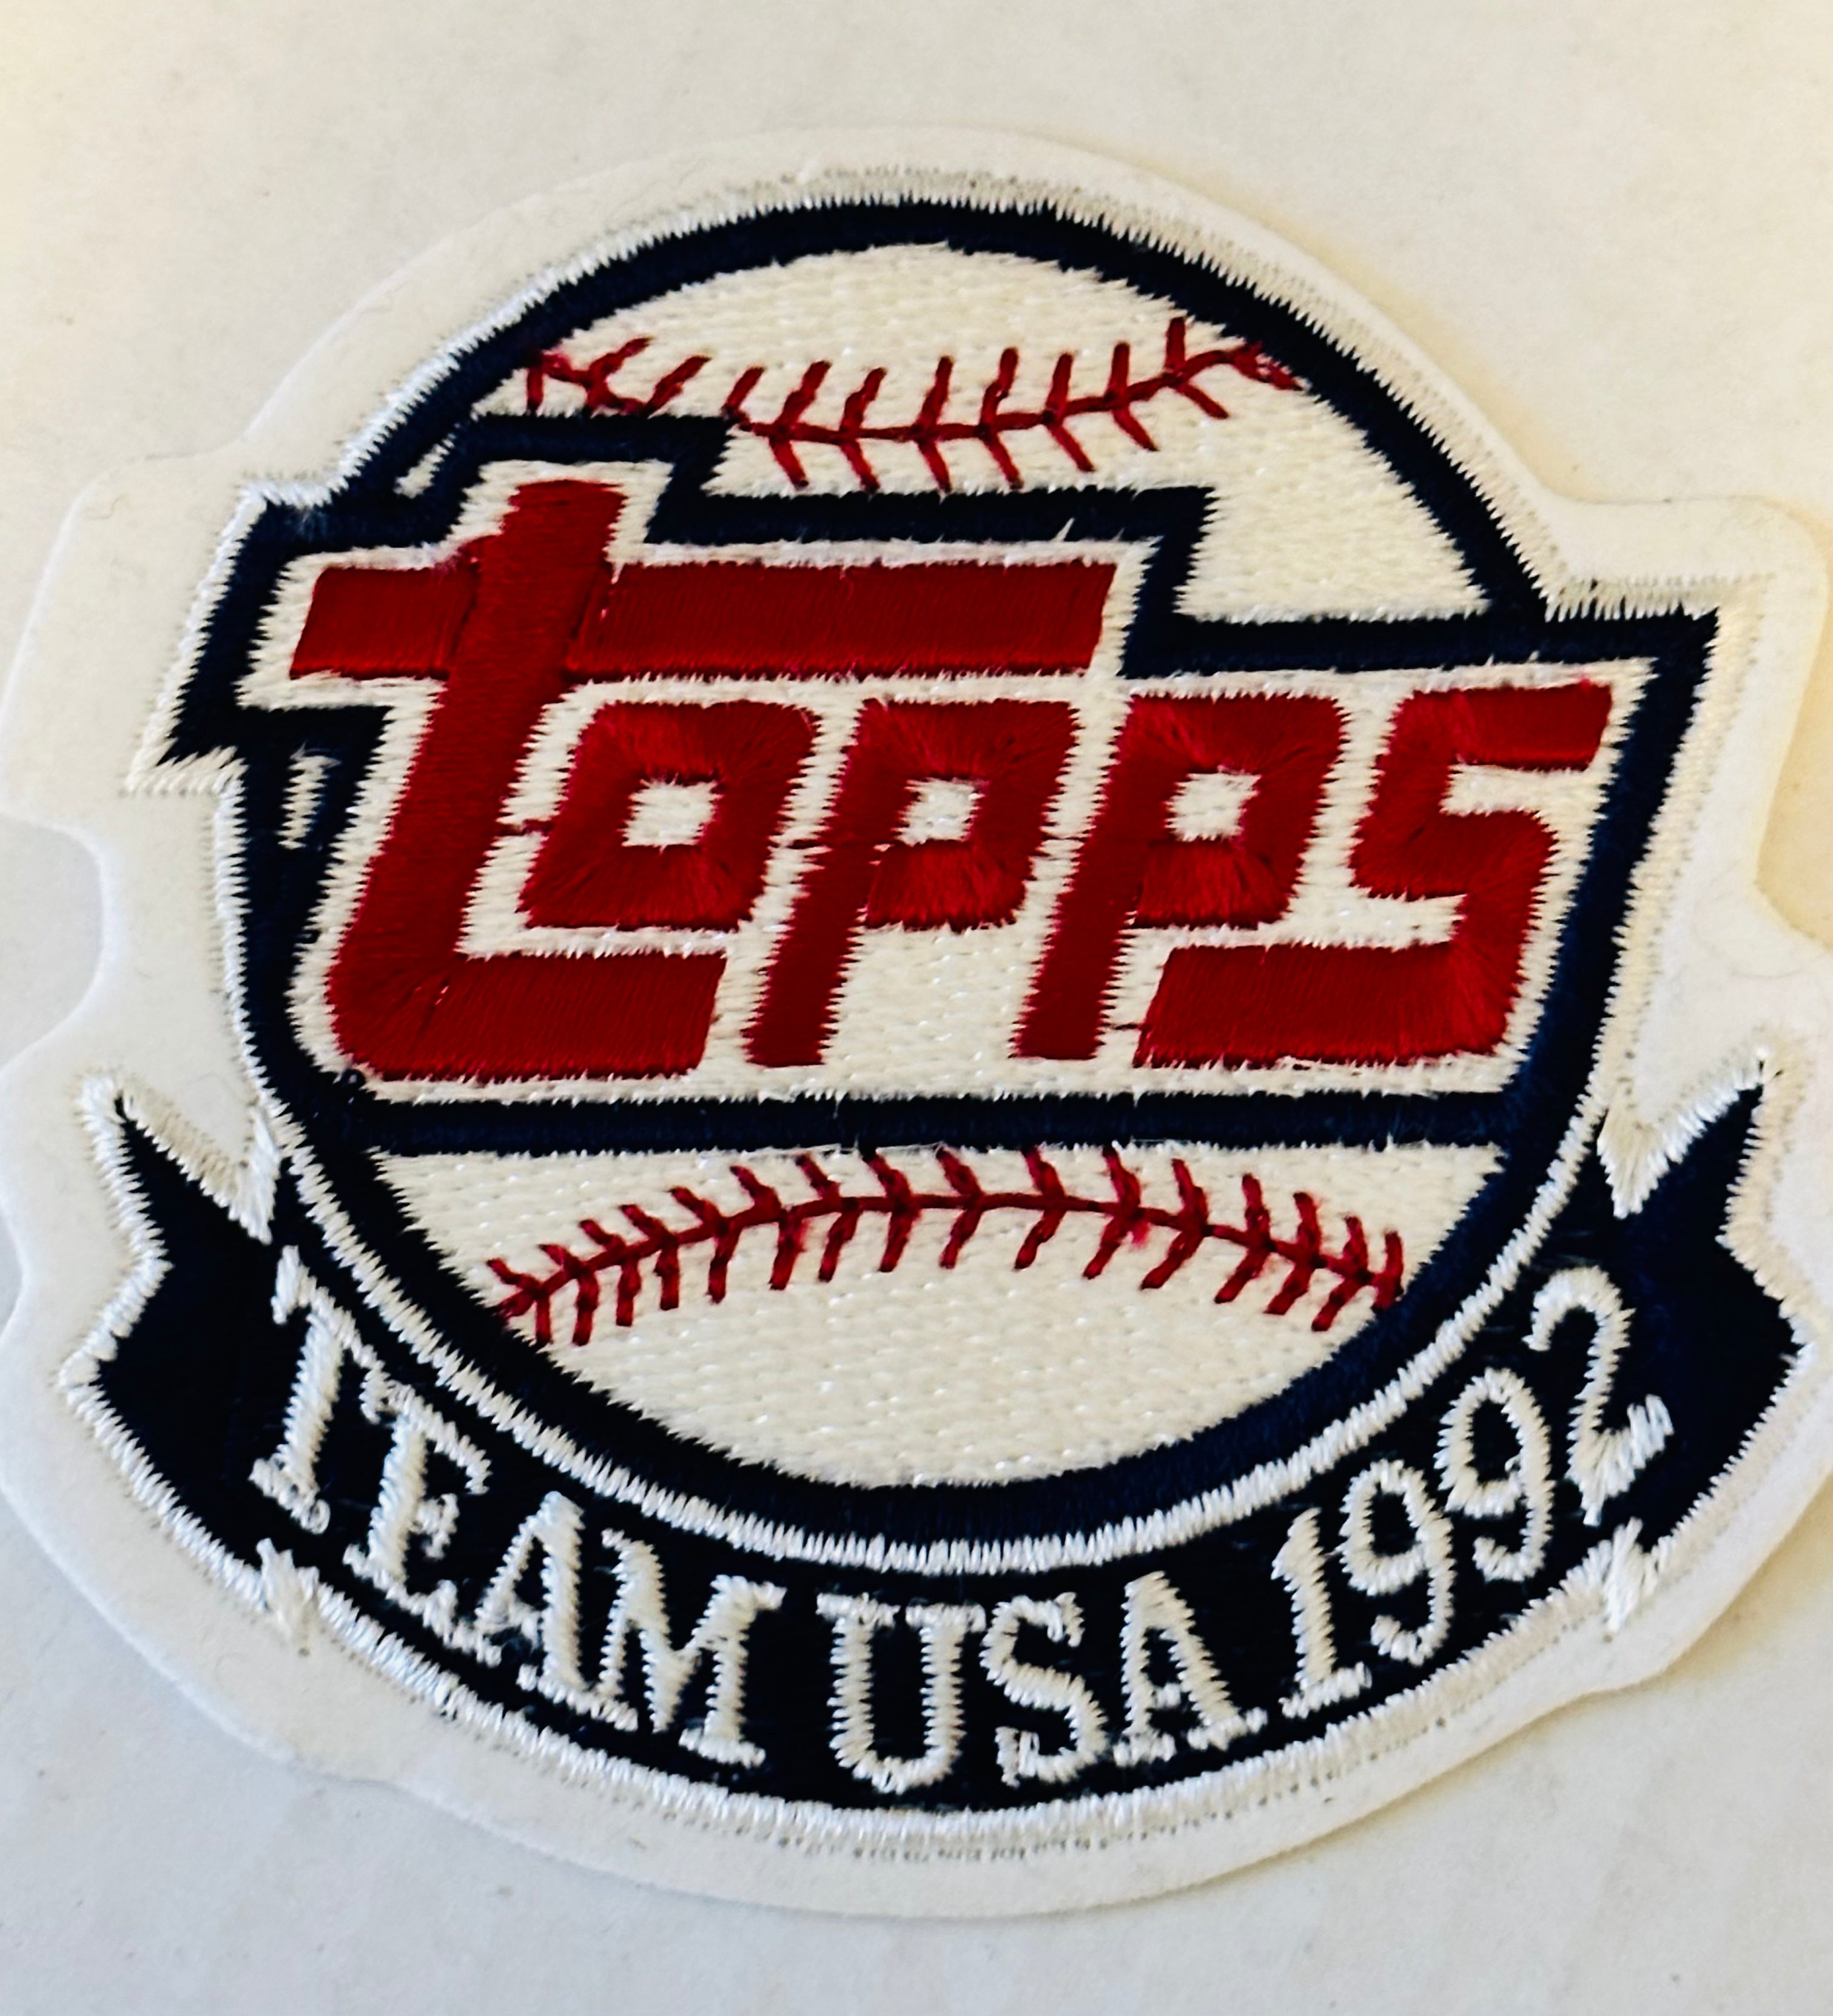 Topps Team USA vintage baseball patch